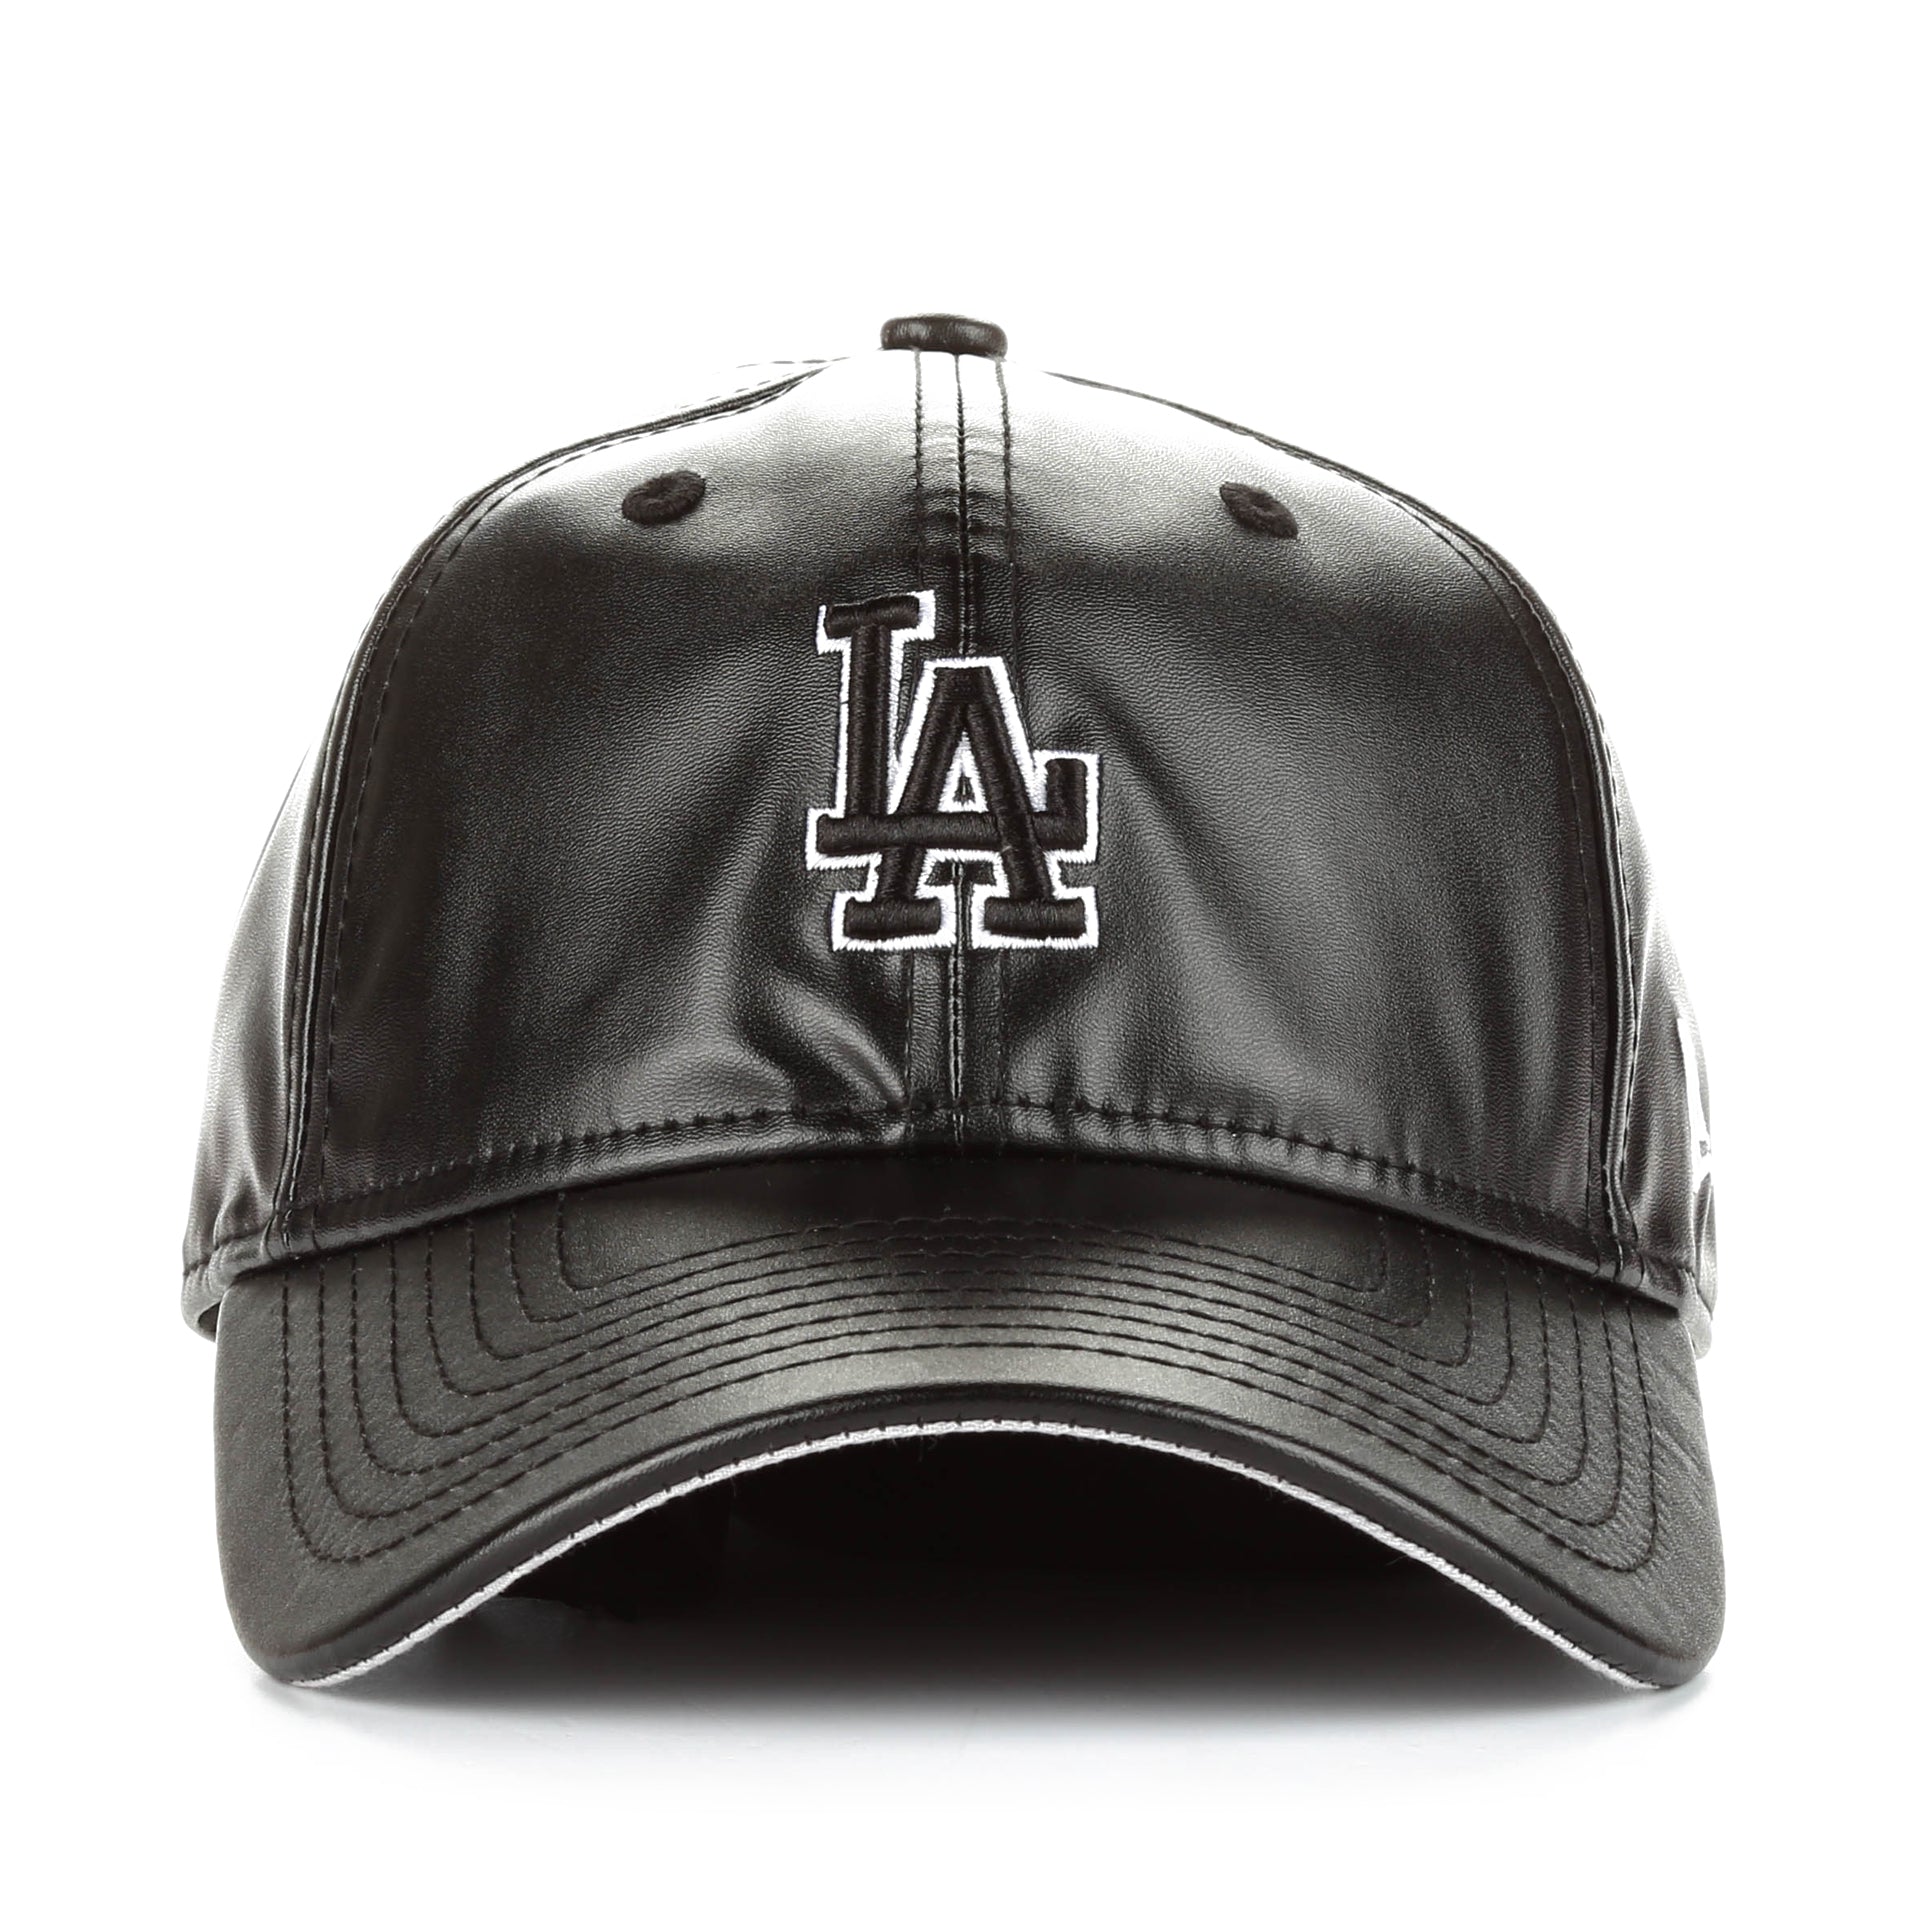 New Era 9Twenty PU Leather Squad Cap - Los Angeles Dodgers/Black - New Star